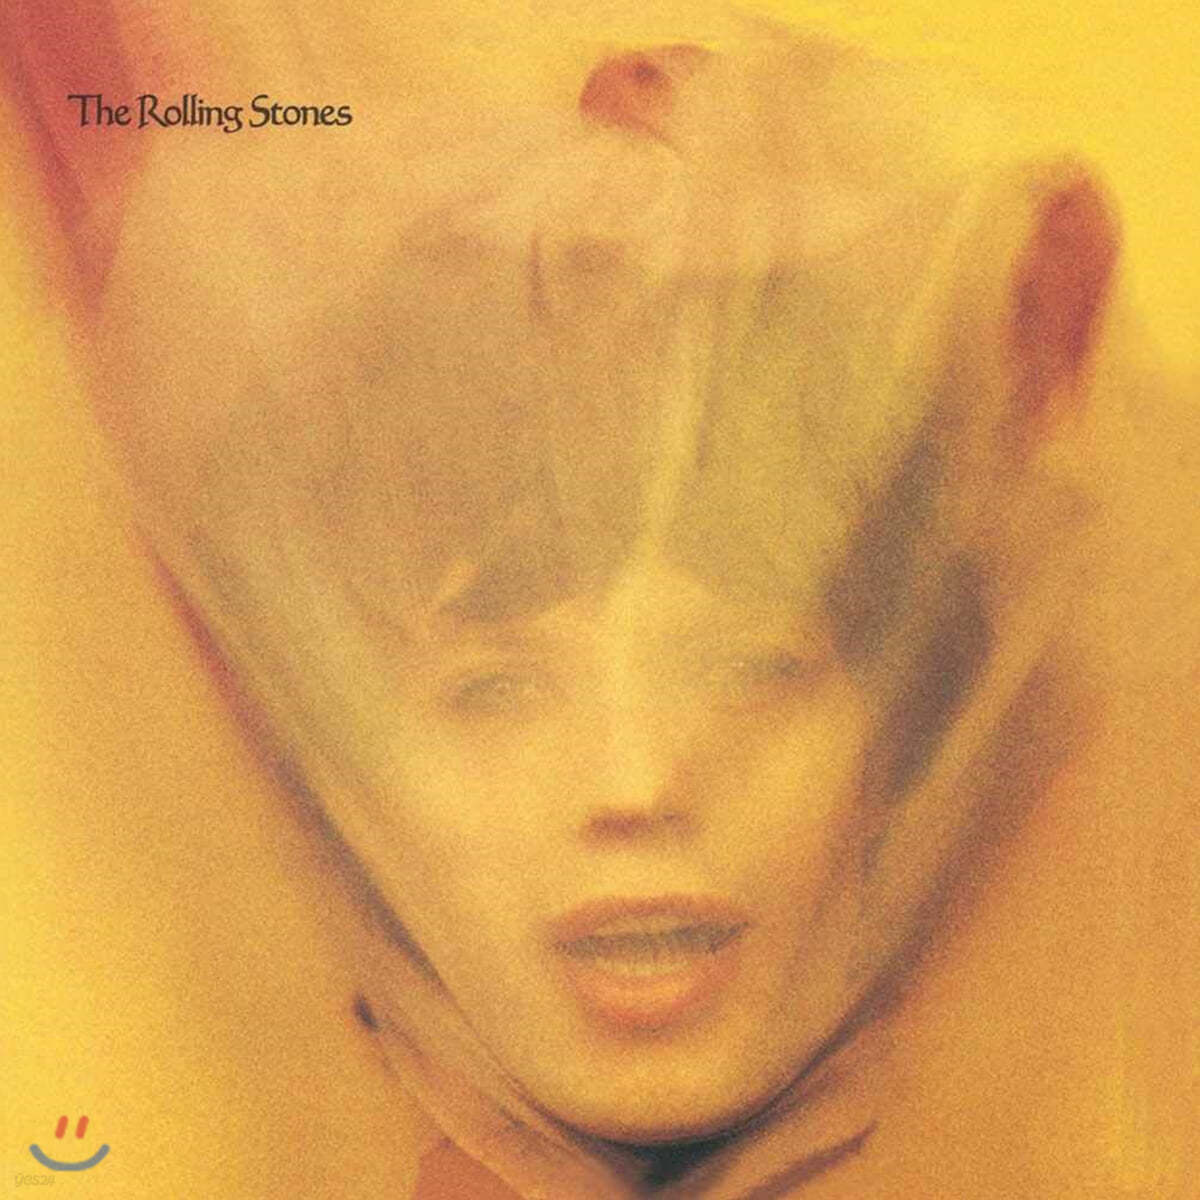 The Rolling Stones (롤링 스톤즈) - Goats Head Soup (New Stereo Album Mix)